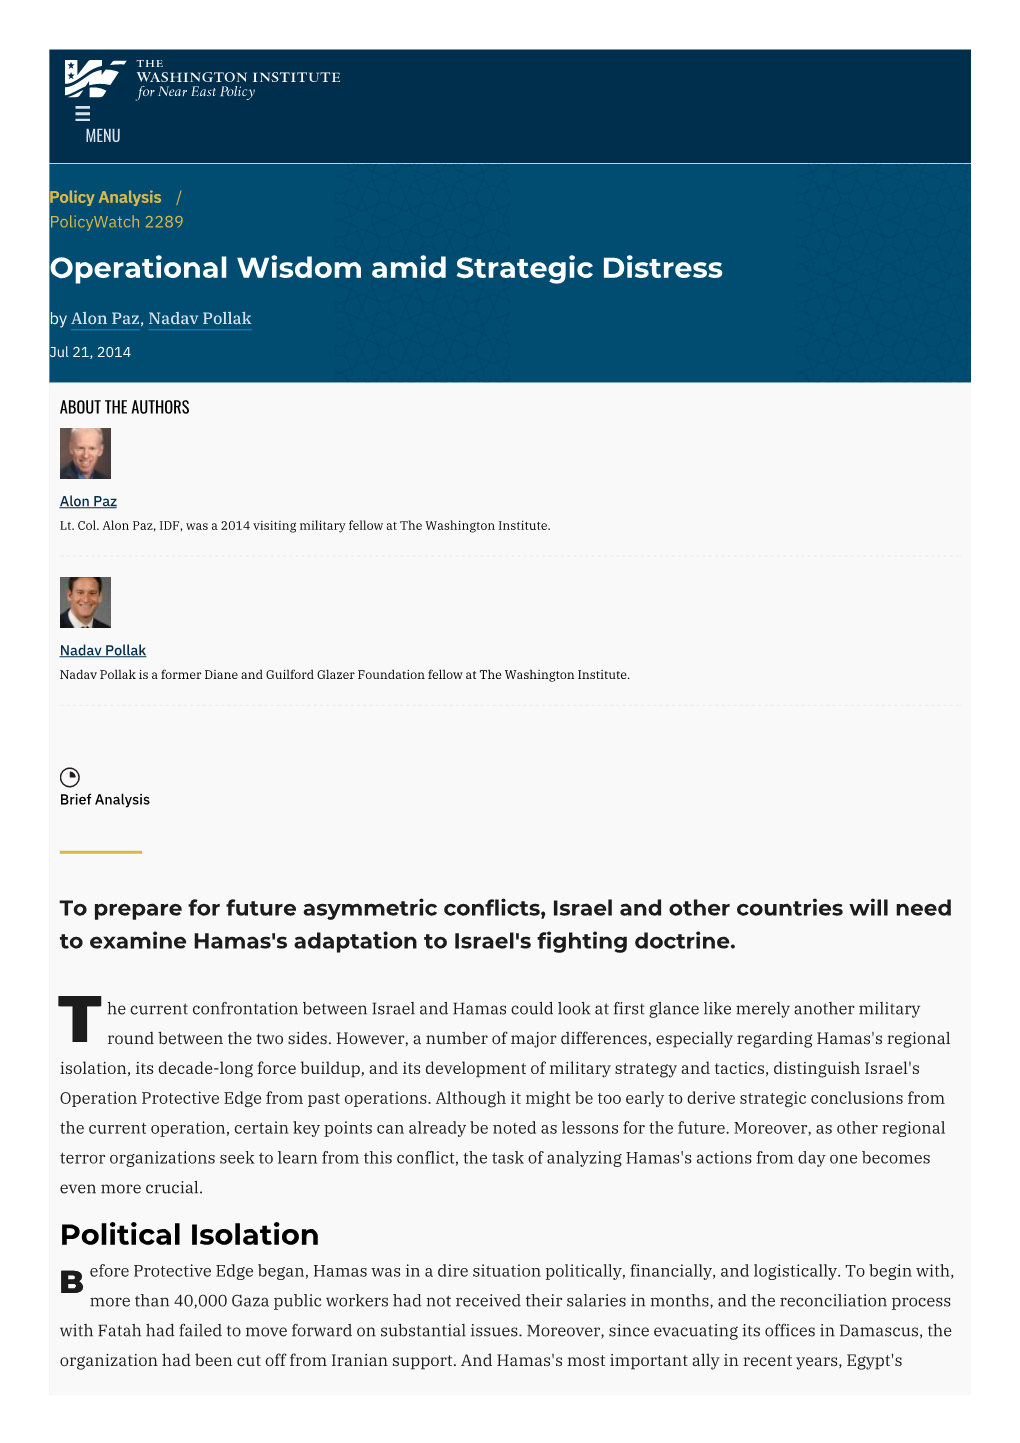 Operational Wisdom Amid Strategic Distress | the Washington Institute